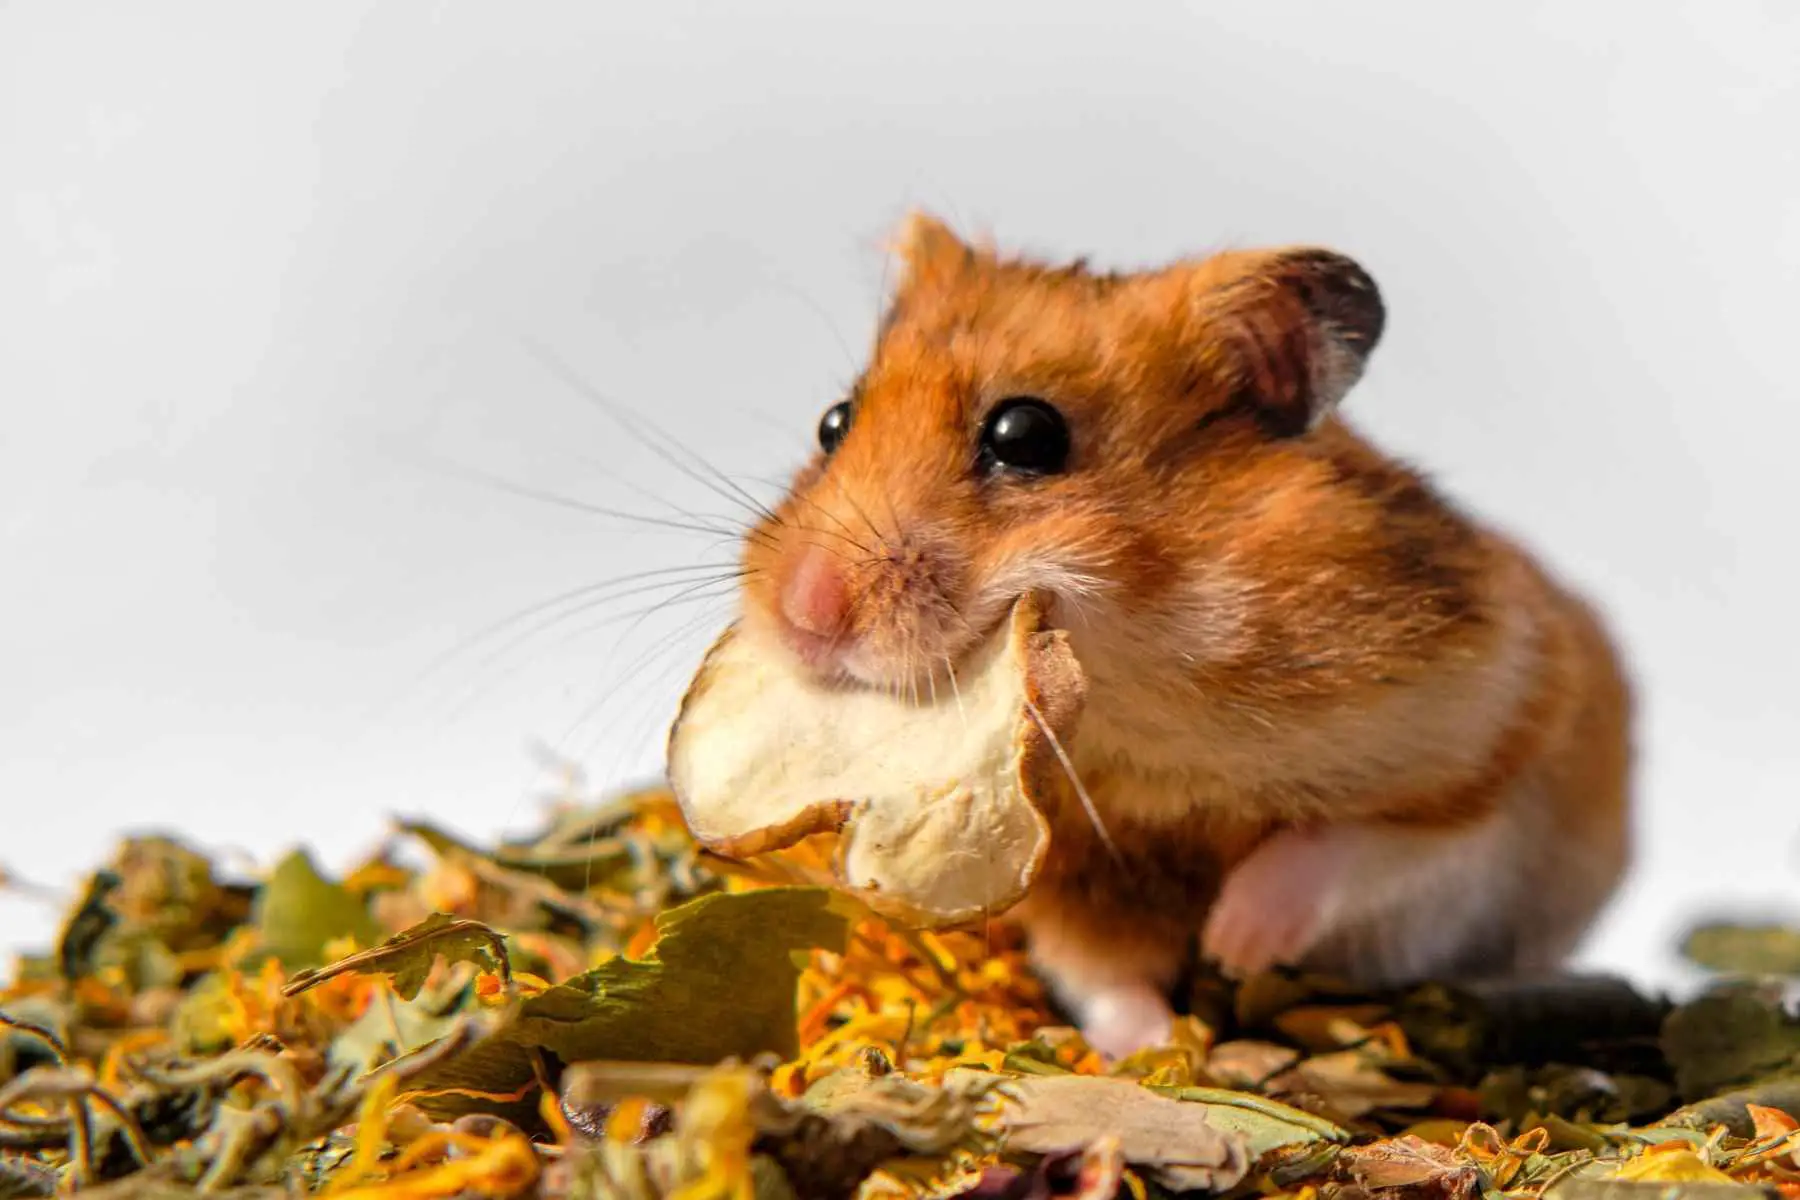 Cute hamster having a snack